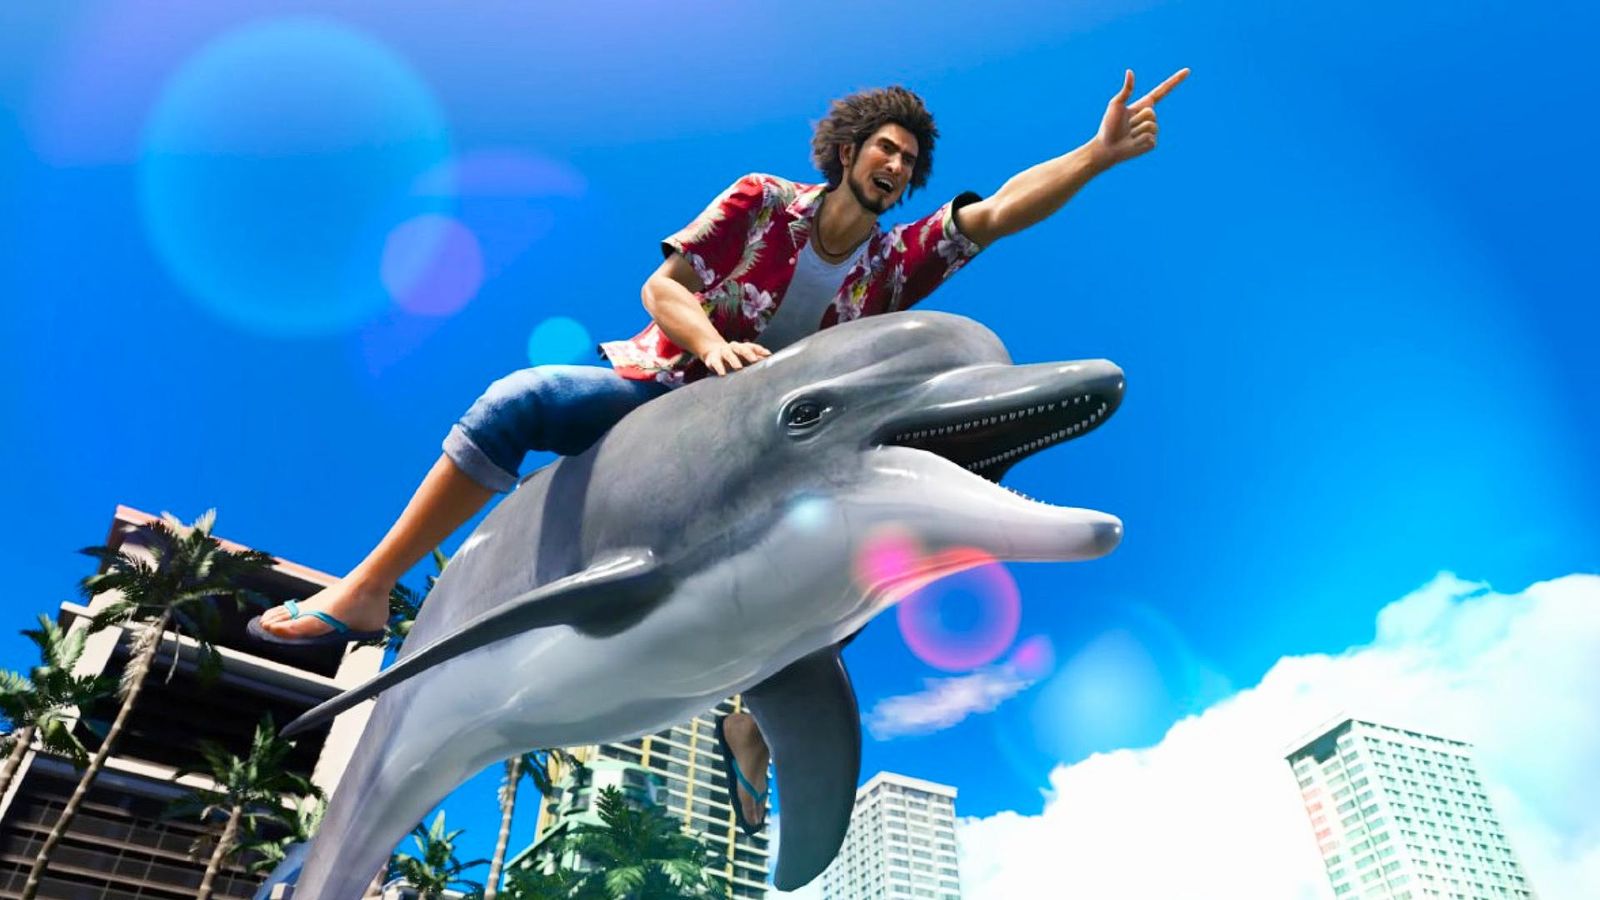 Ichiban Kasuga riding a dolphin